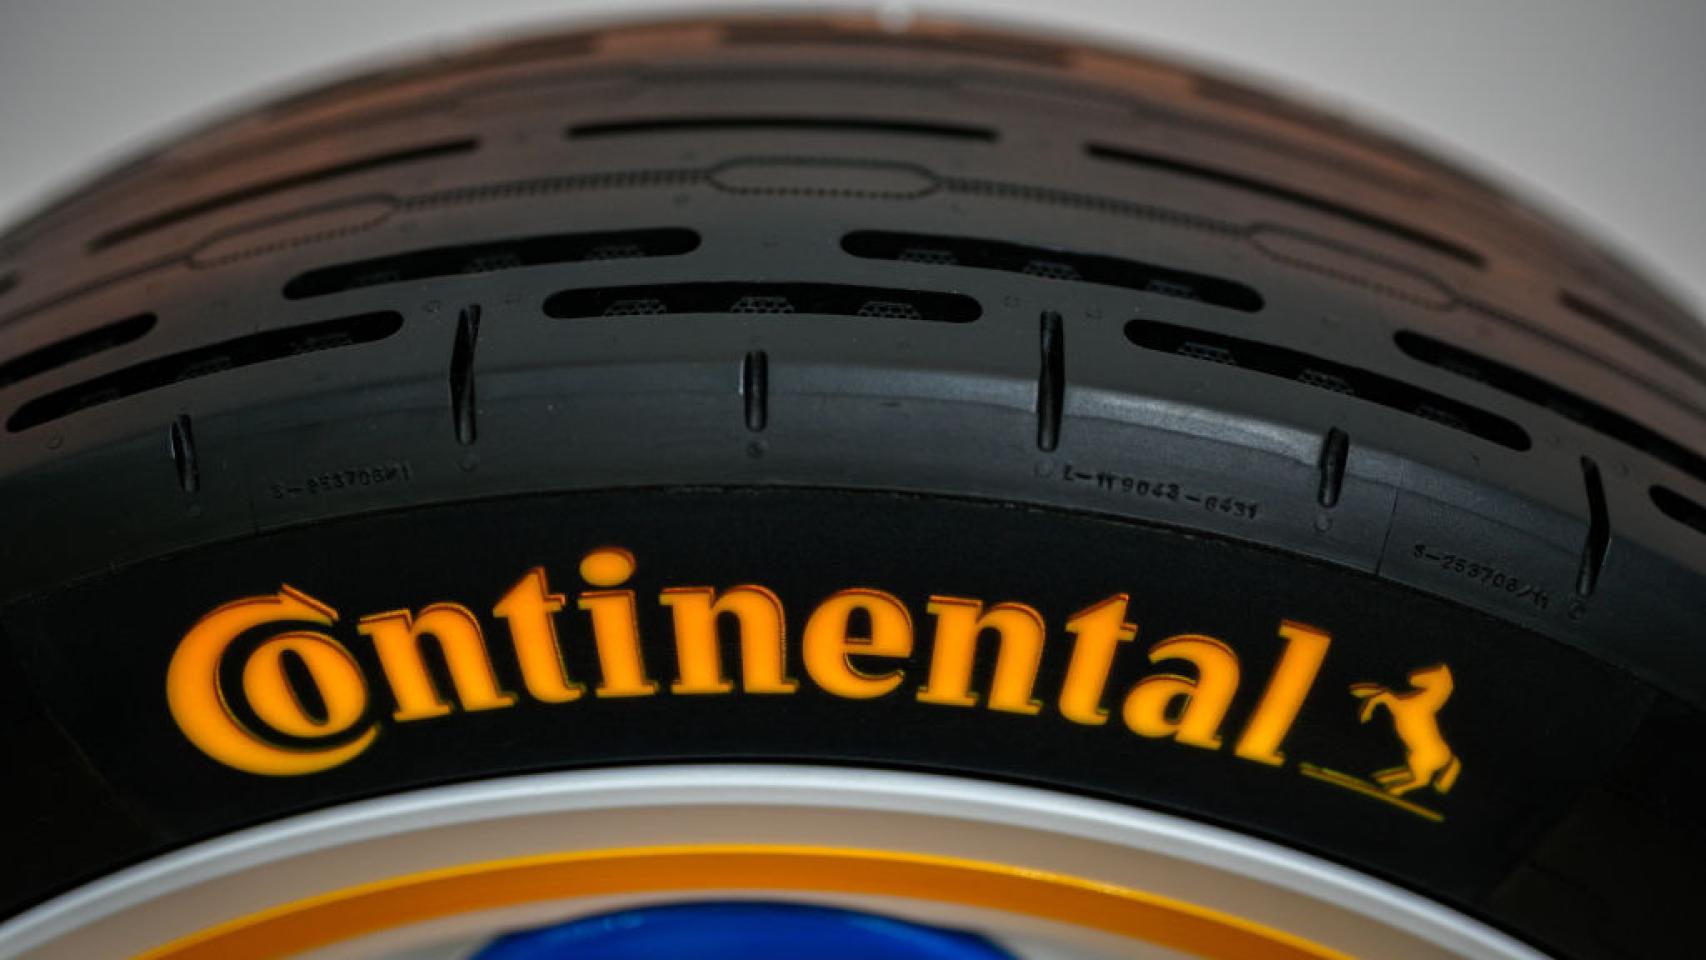 Шины континенталь. Continental. Continental Media. Gnad1a Continental. Happy Birthday with Continental Tire.